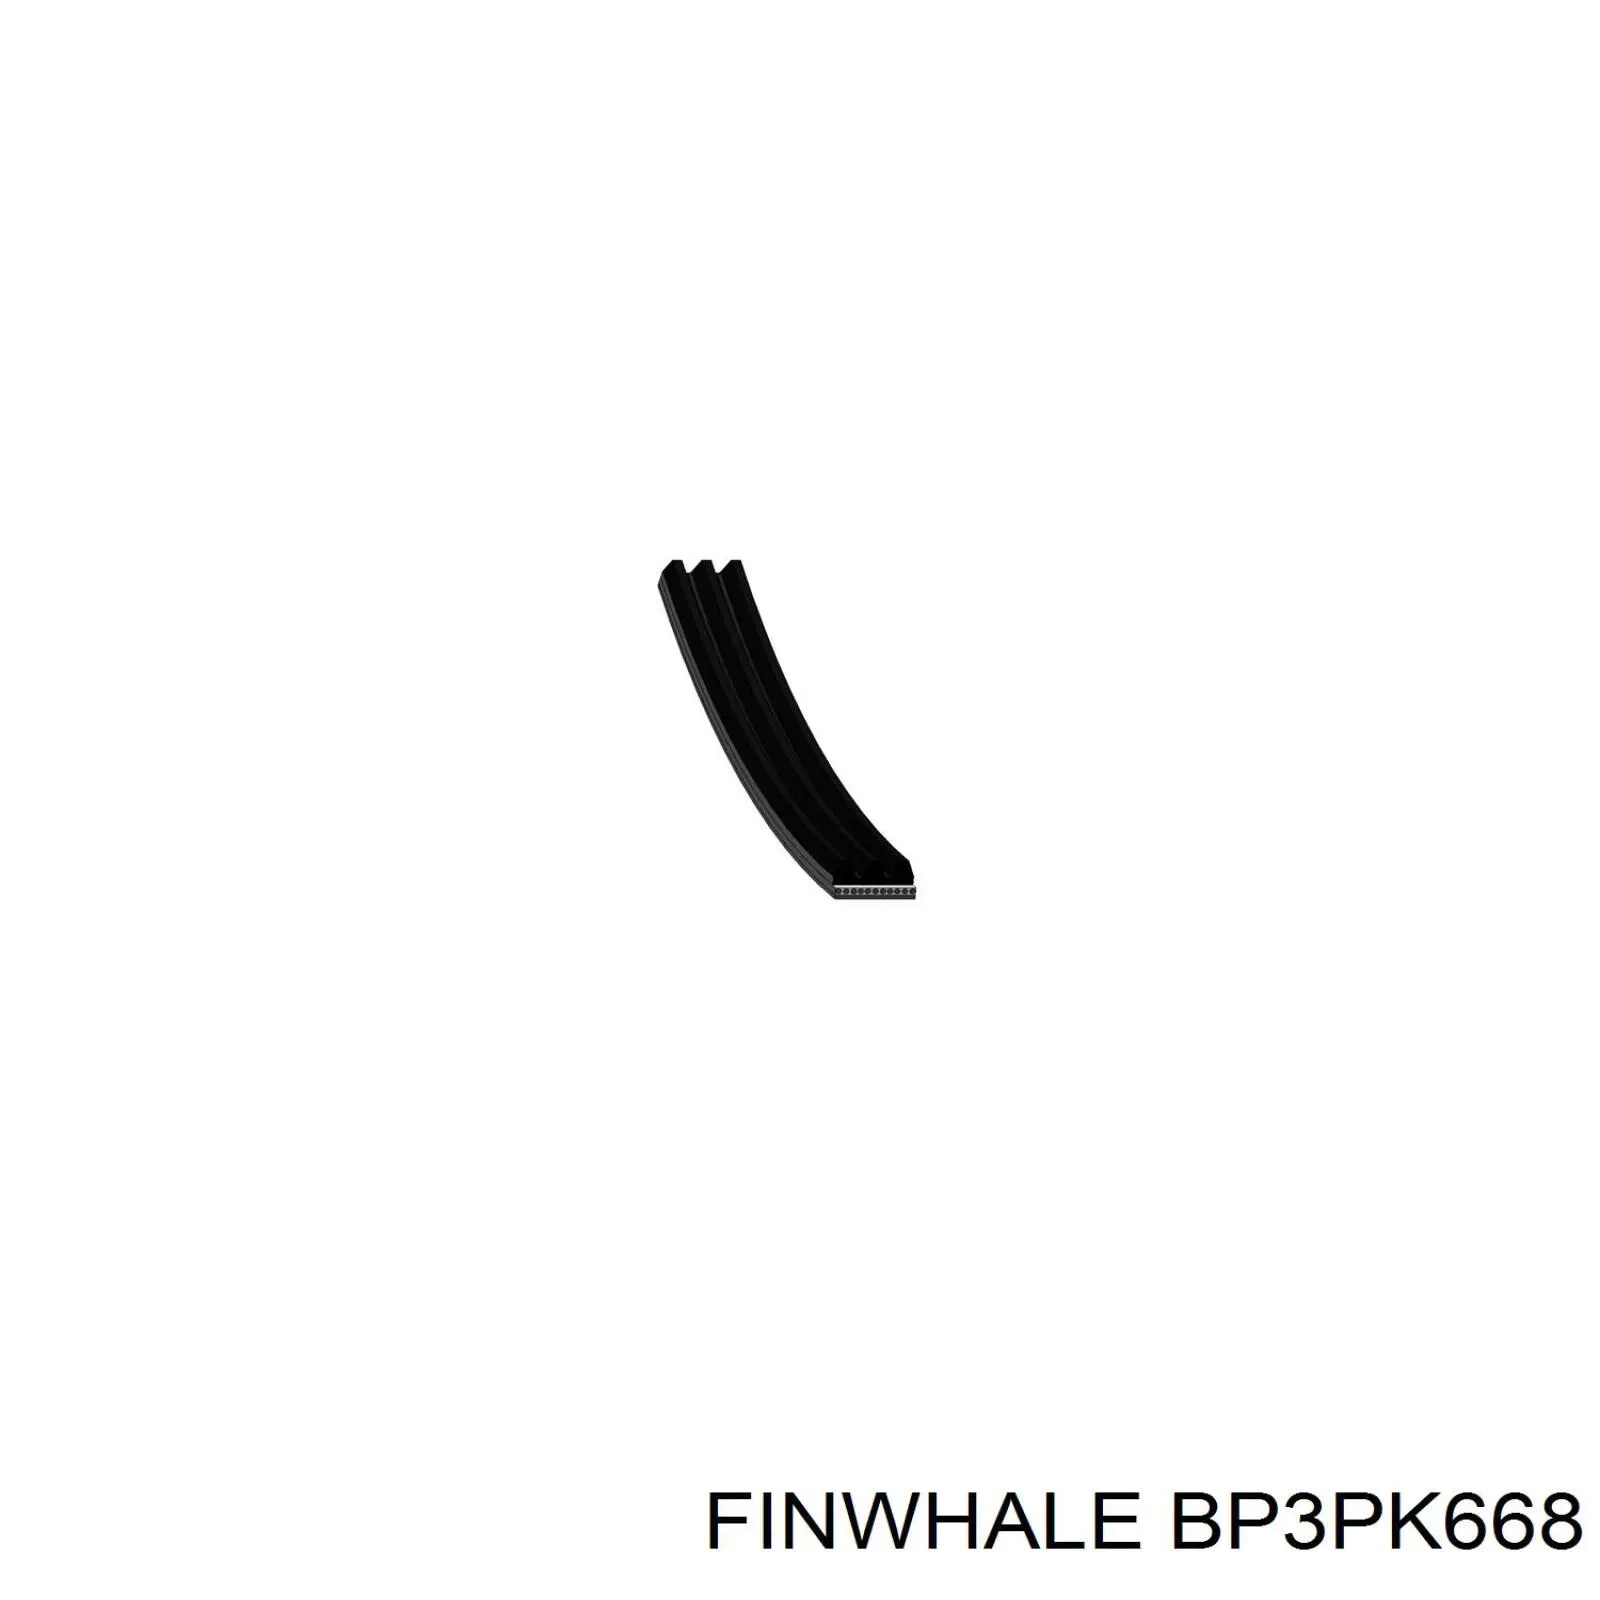 BP3PK668 Finwhale correa trapezoidal